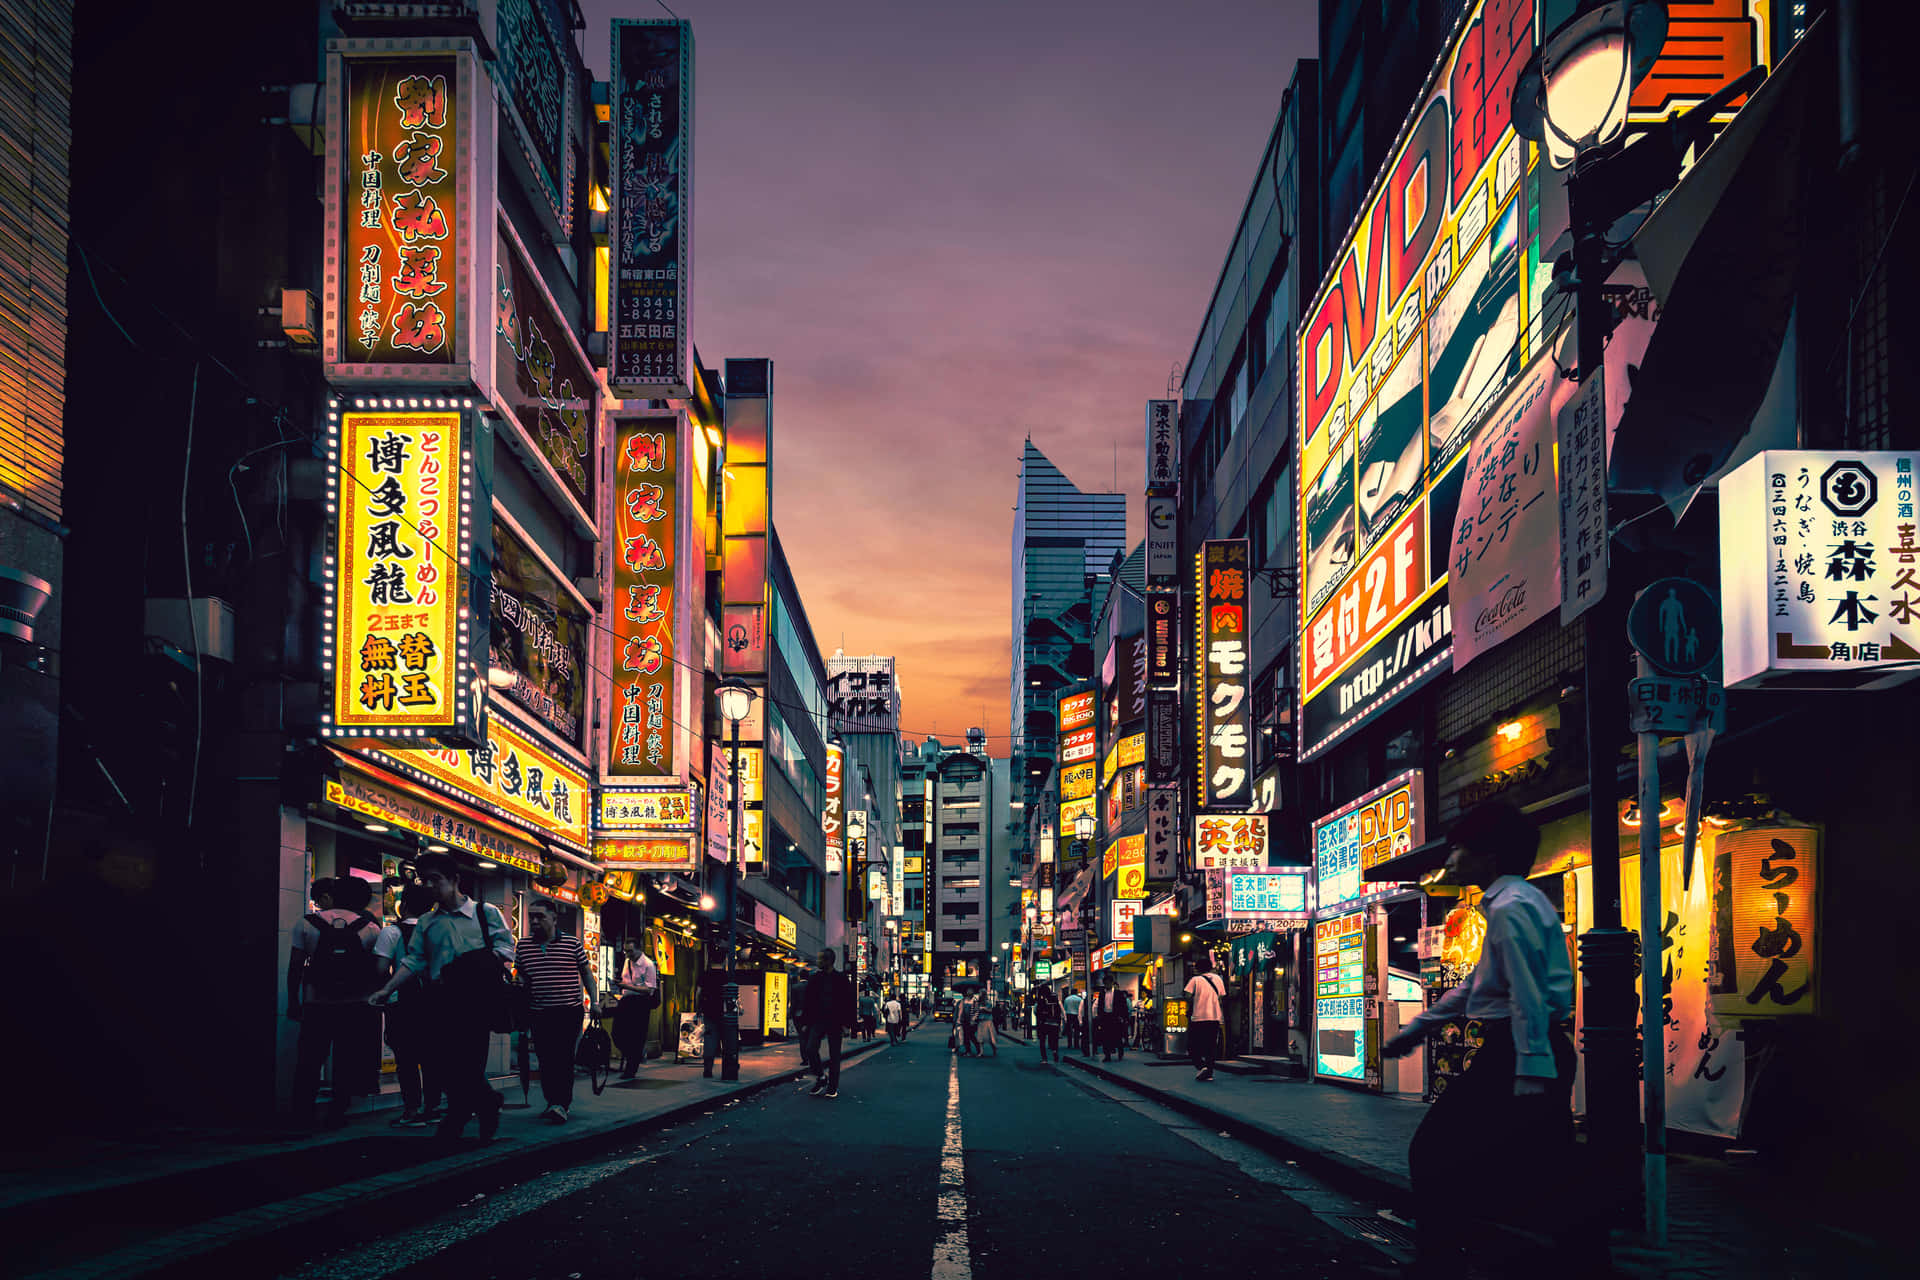 “Vibrant scene of neon lights in Tokyo, Japan.” Wallpaper